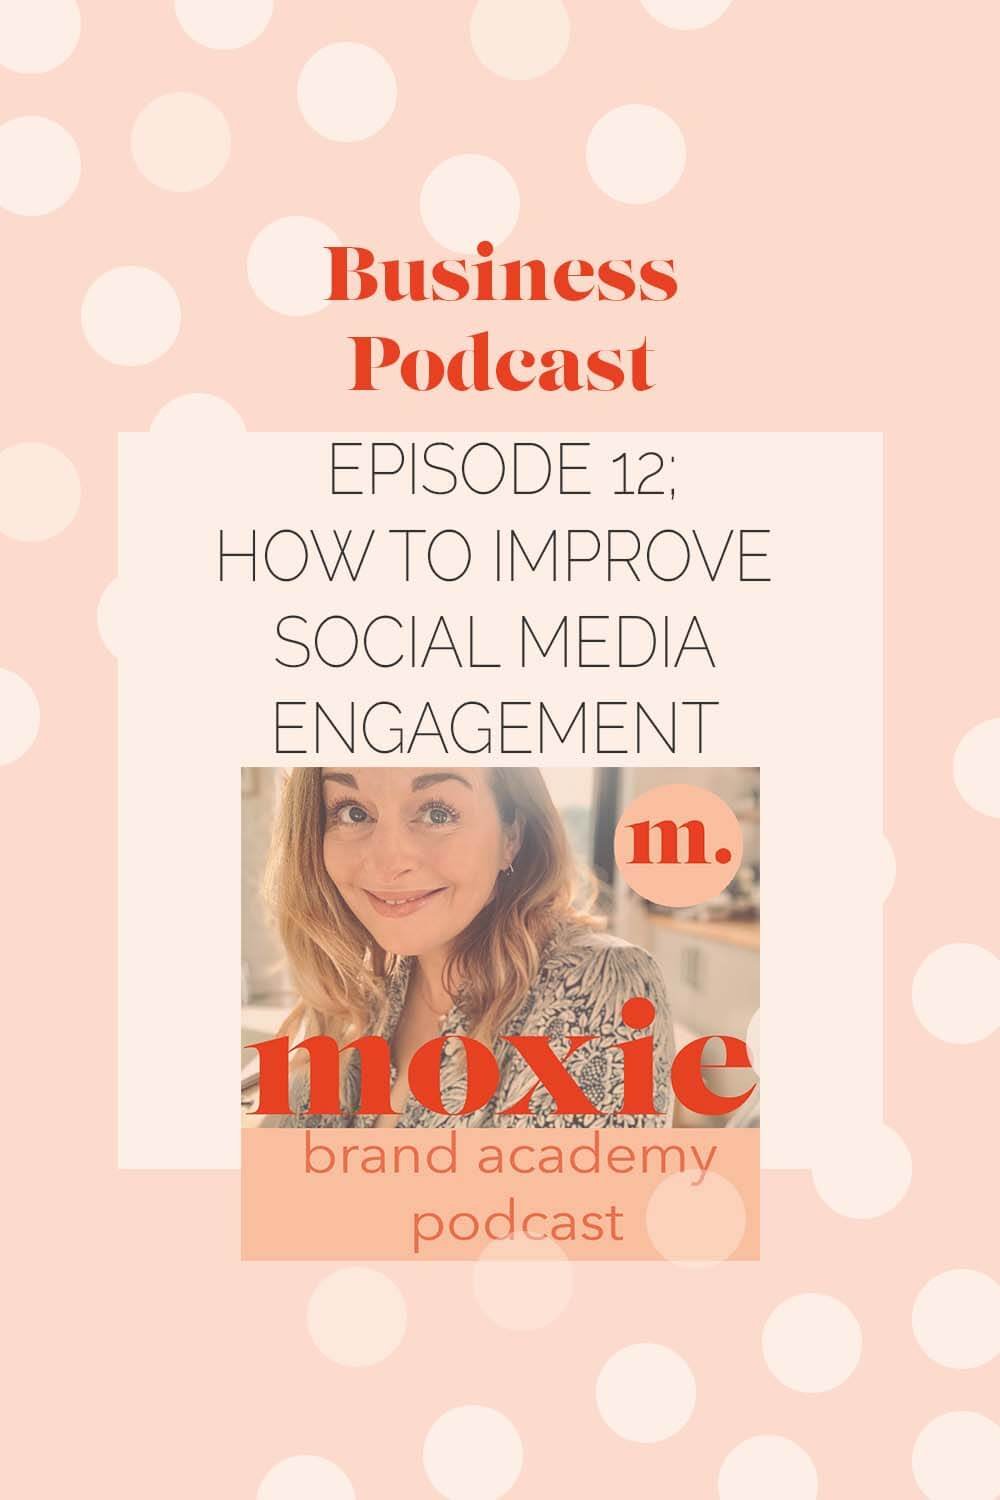 Improve Engagement on social media